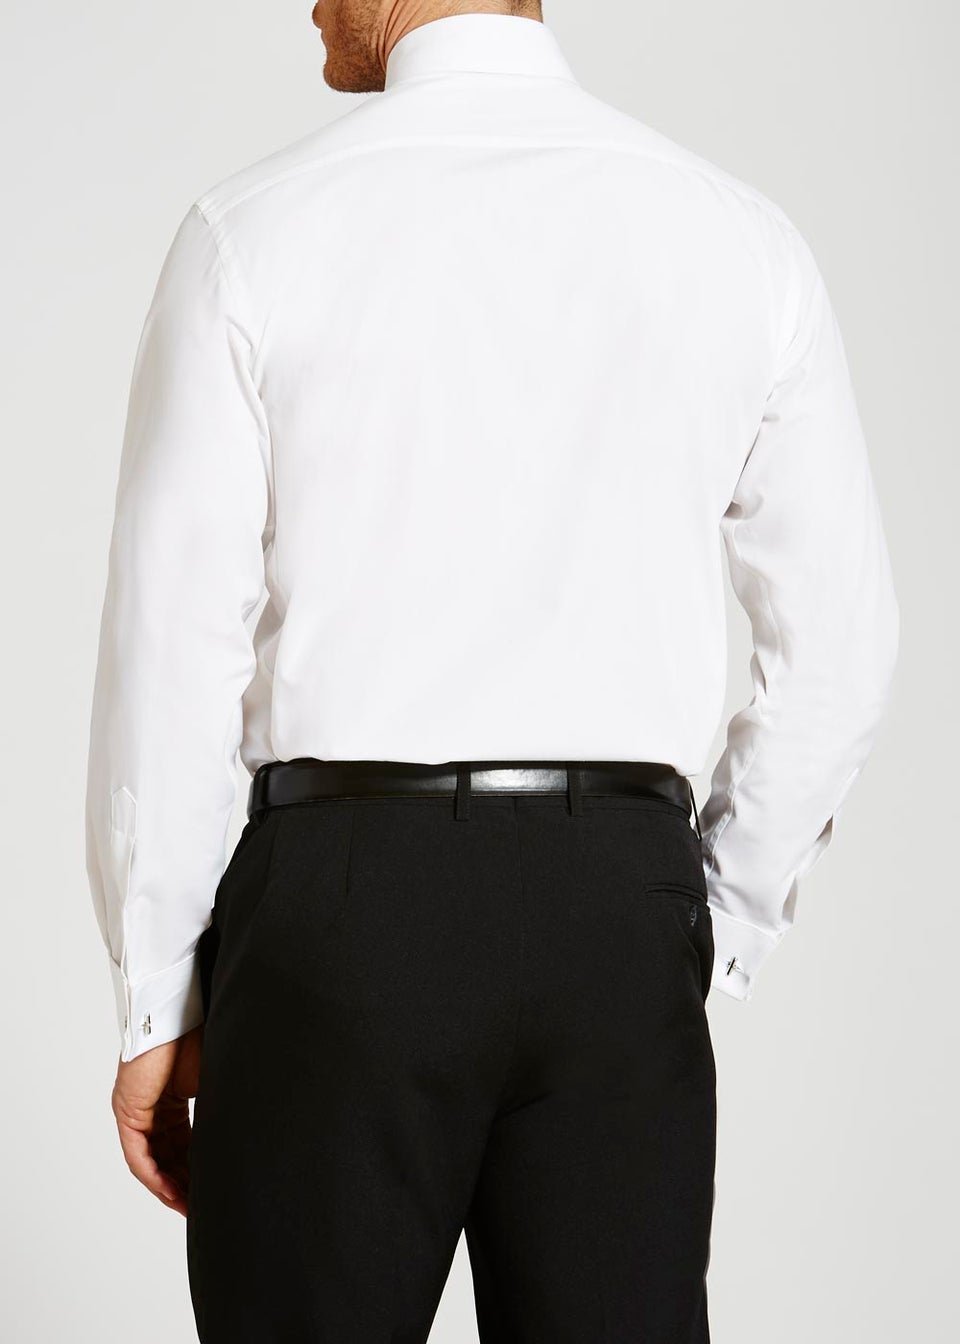 Taylor & Wright White Regular Fit Tuxedo Shirt & Bow Tie Set